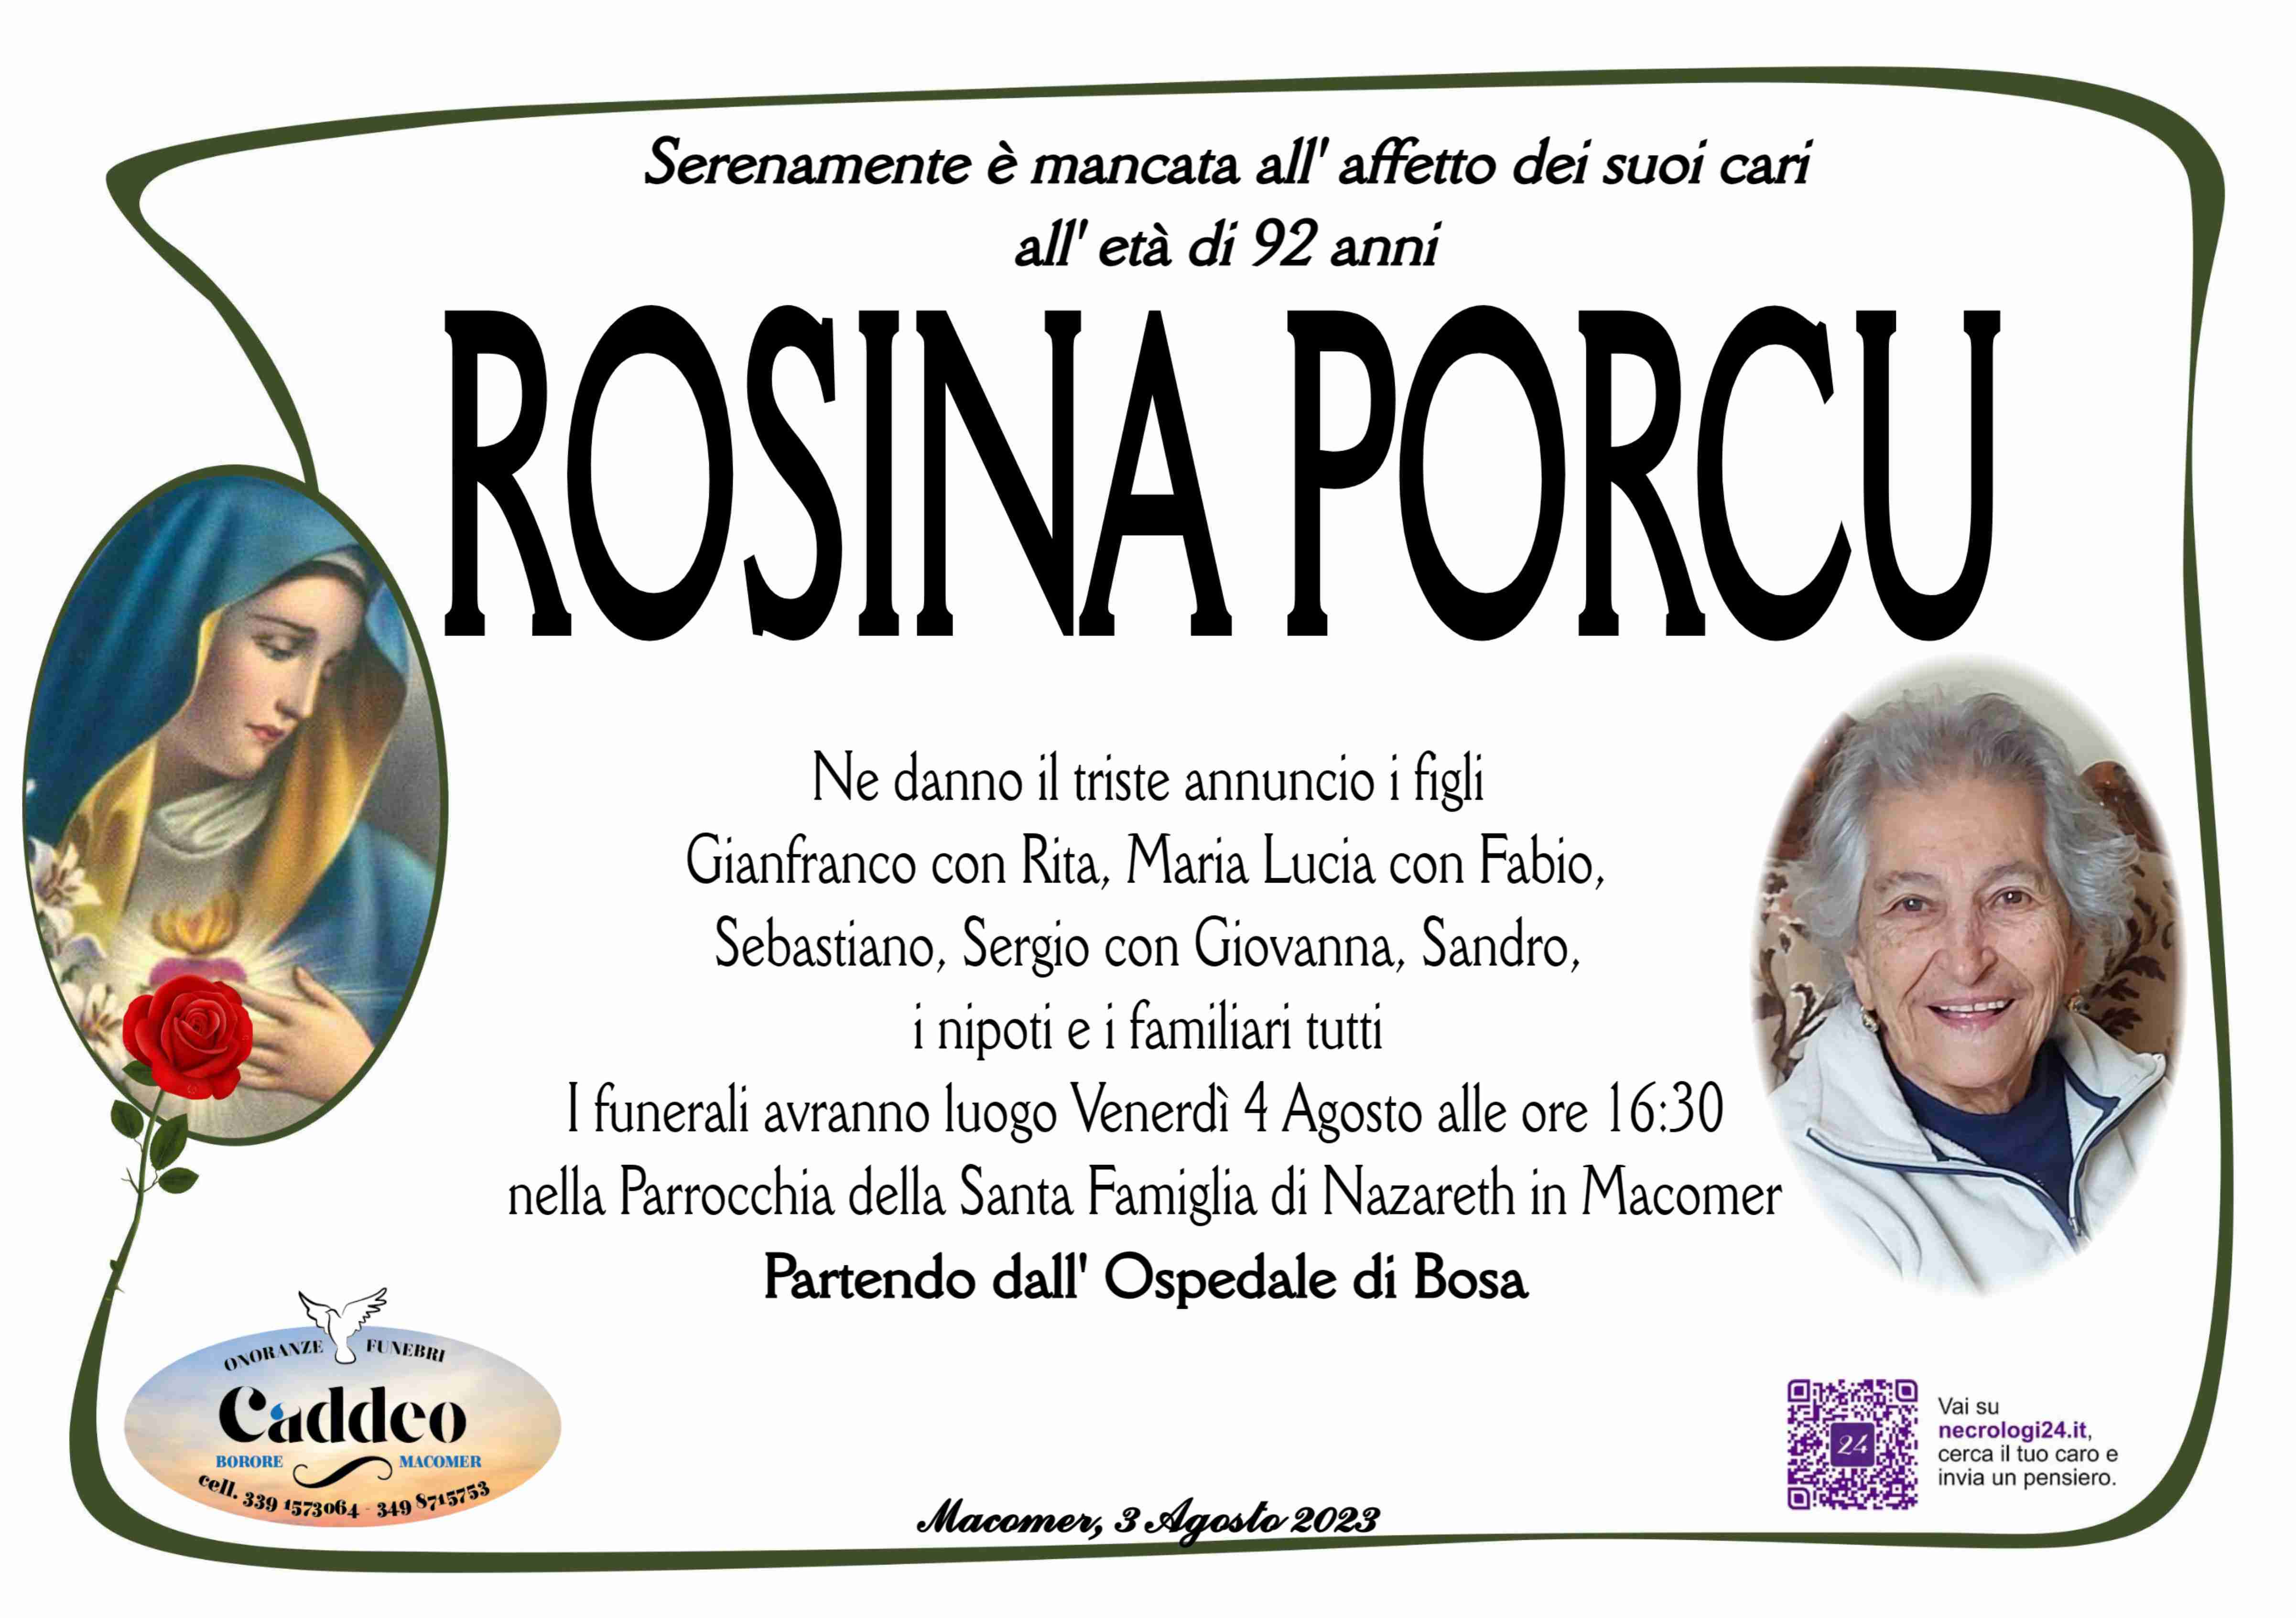 Rosina Porcu